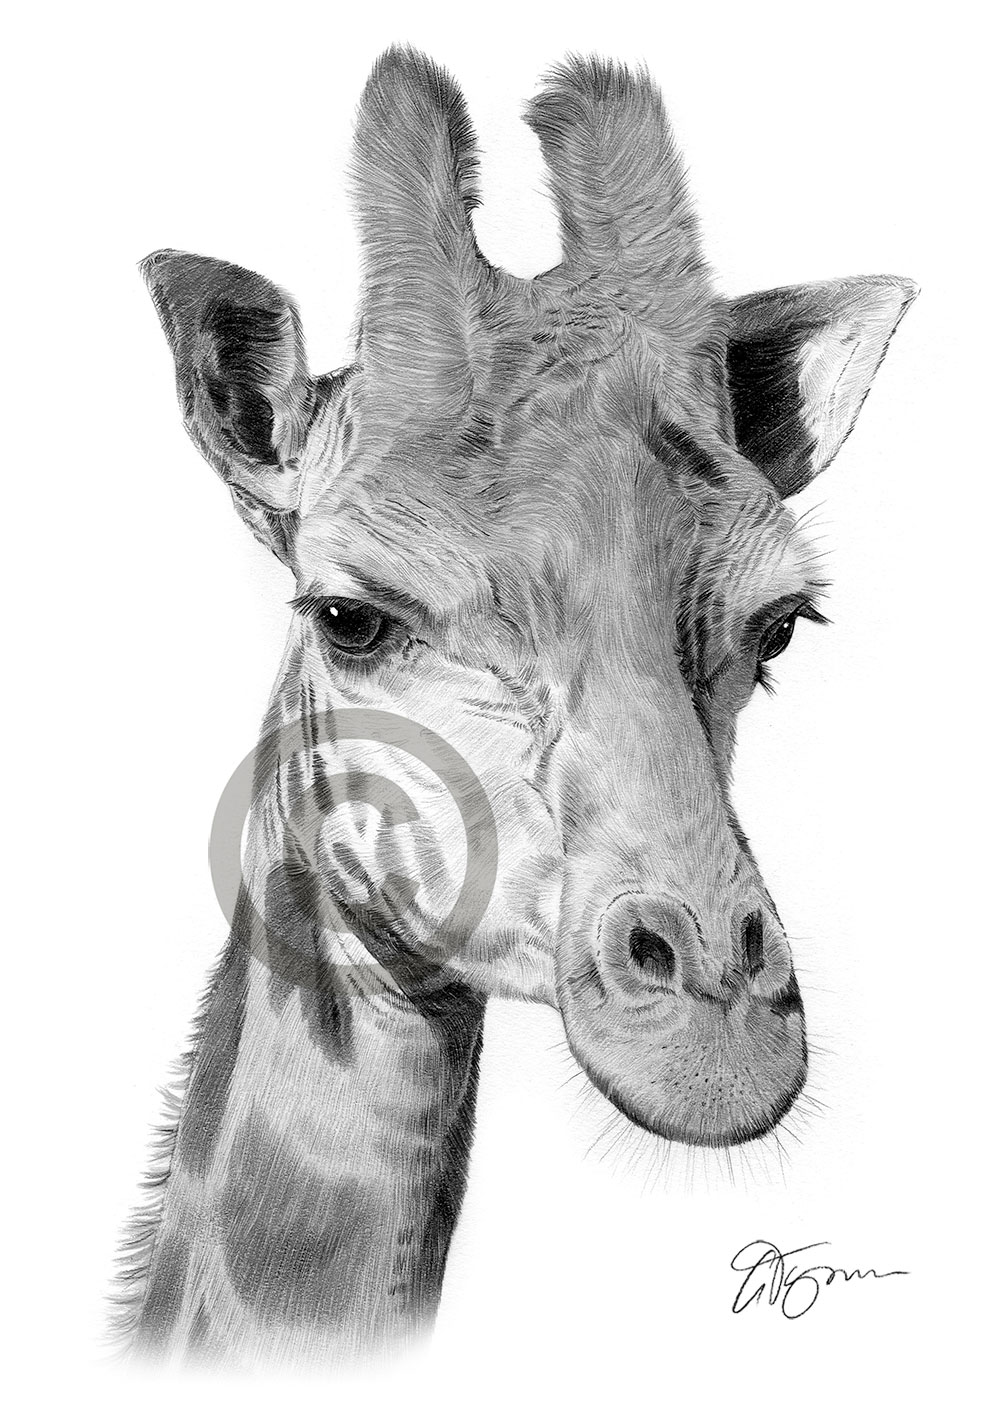 Pencil drawing of an African giraffe by artist Gary Tymon